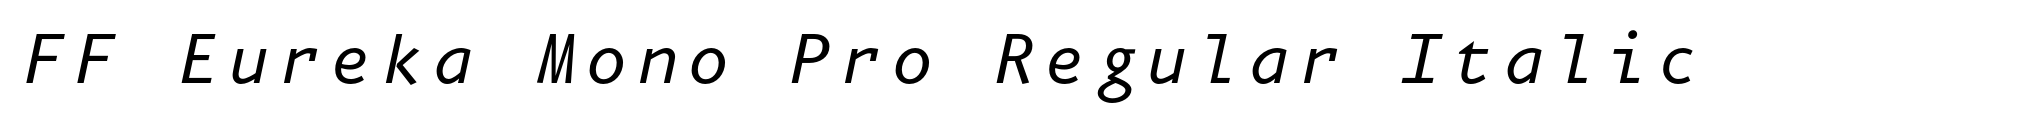 FF Eureka Mono Pro Regular Italic image